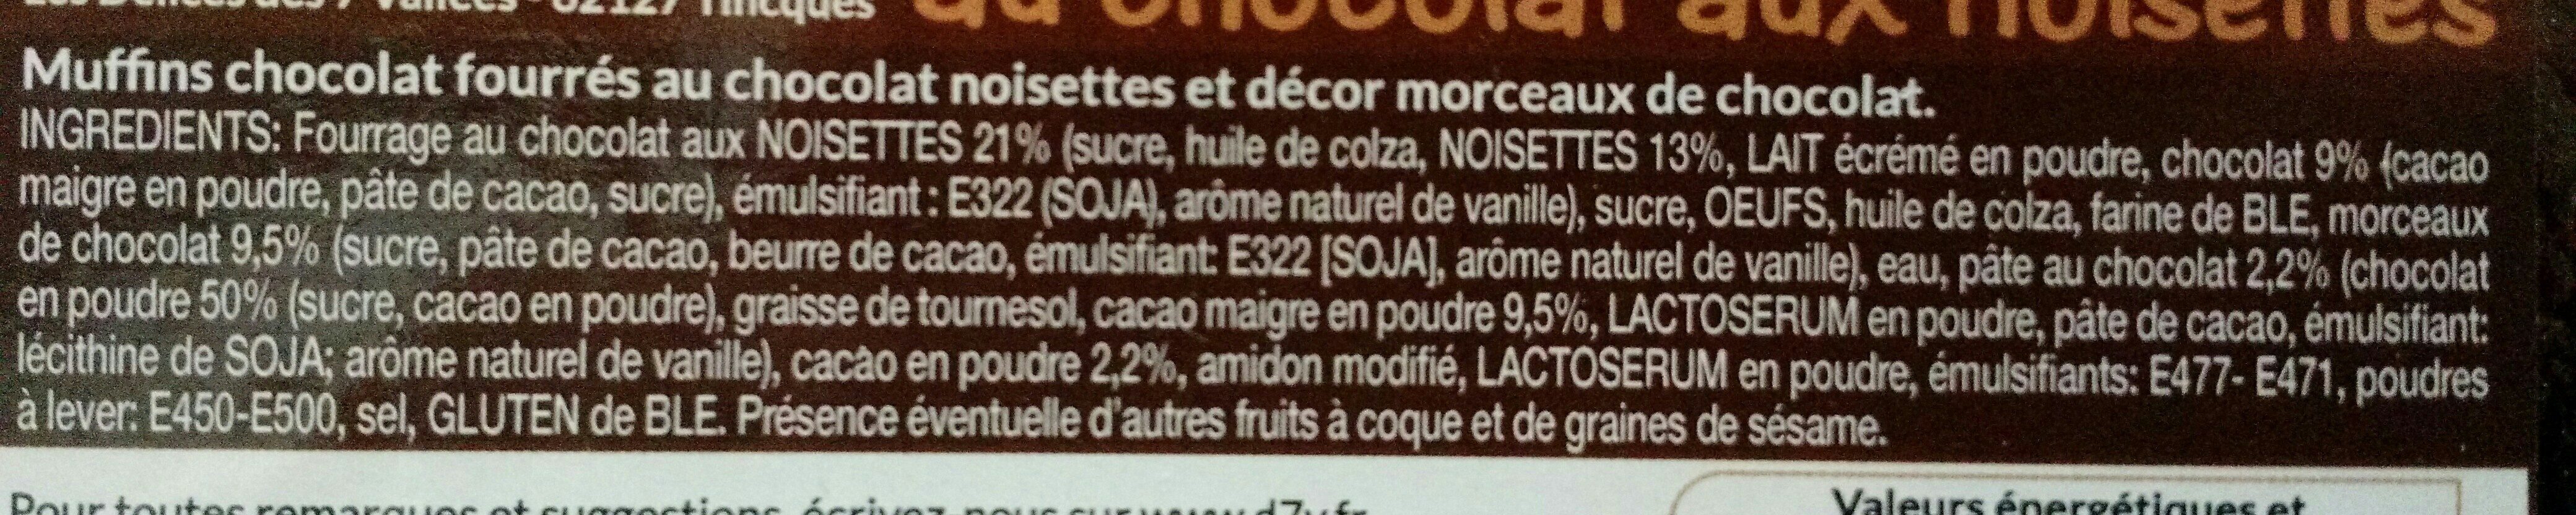 2 Muffins coeur fondant au chocolat - Ingredients - fr